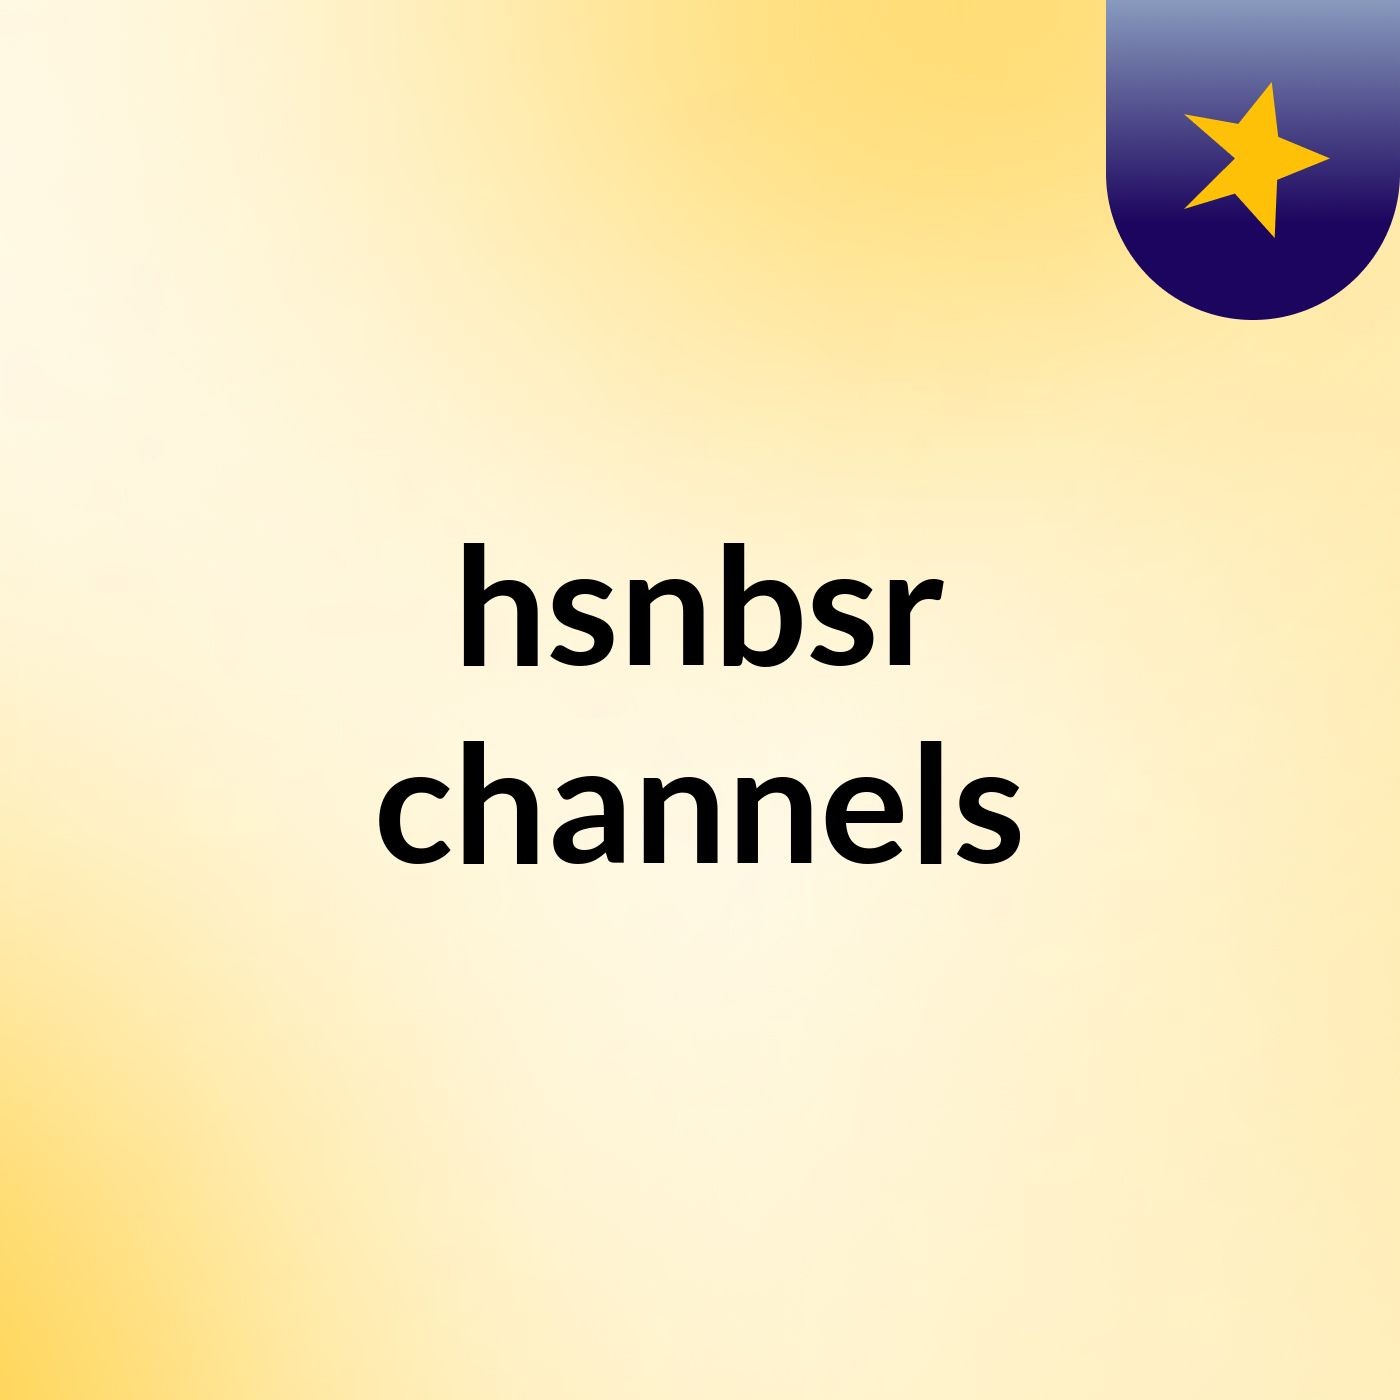 hsnbsr channels